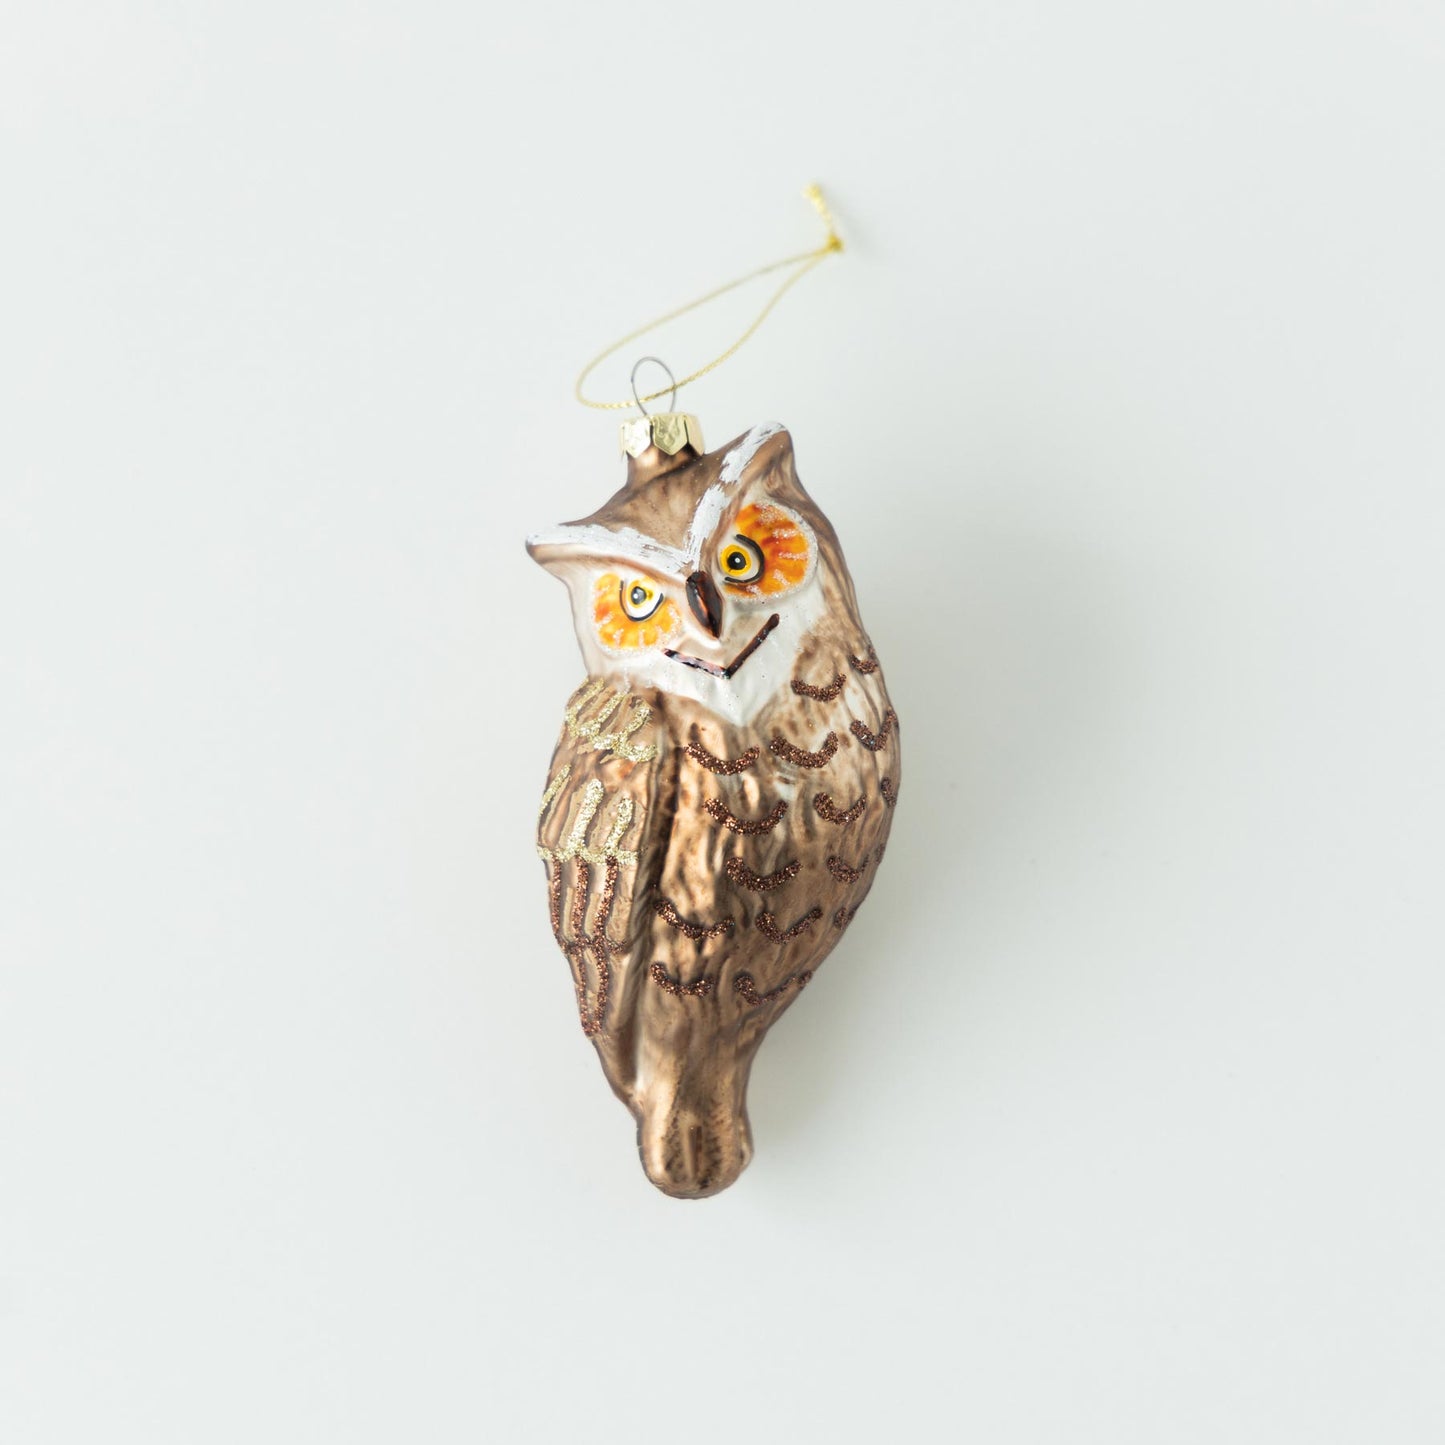 shs0023）OWL 2